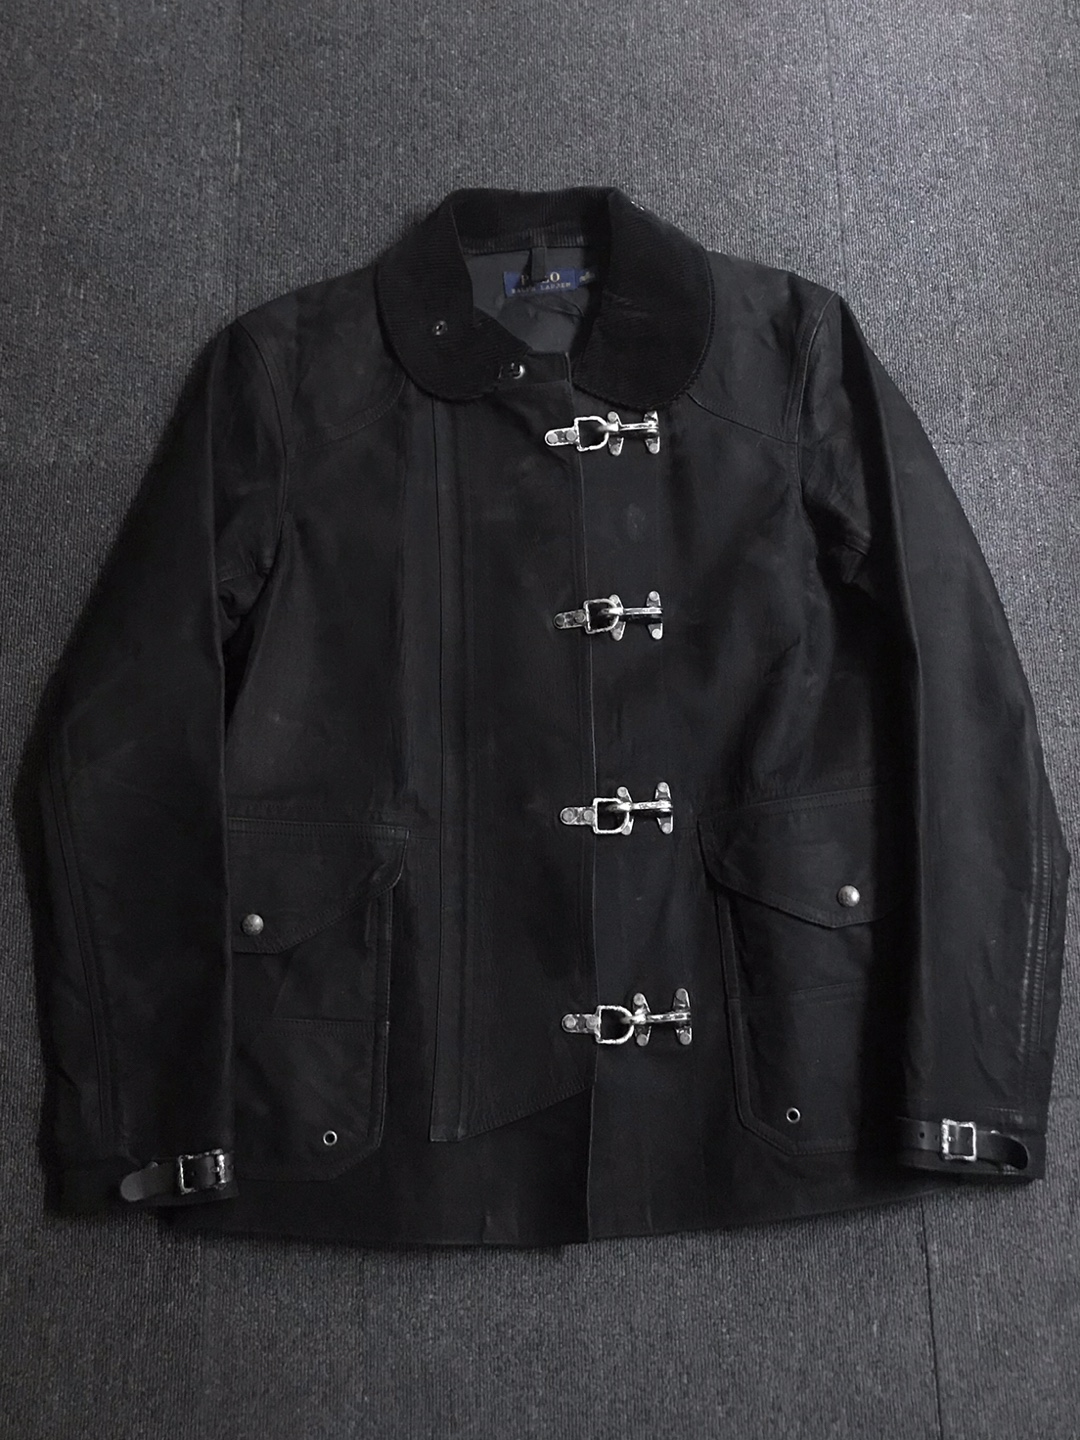 Polo RL leather fireman coat (M size, ~105 추천)